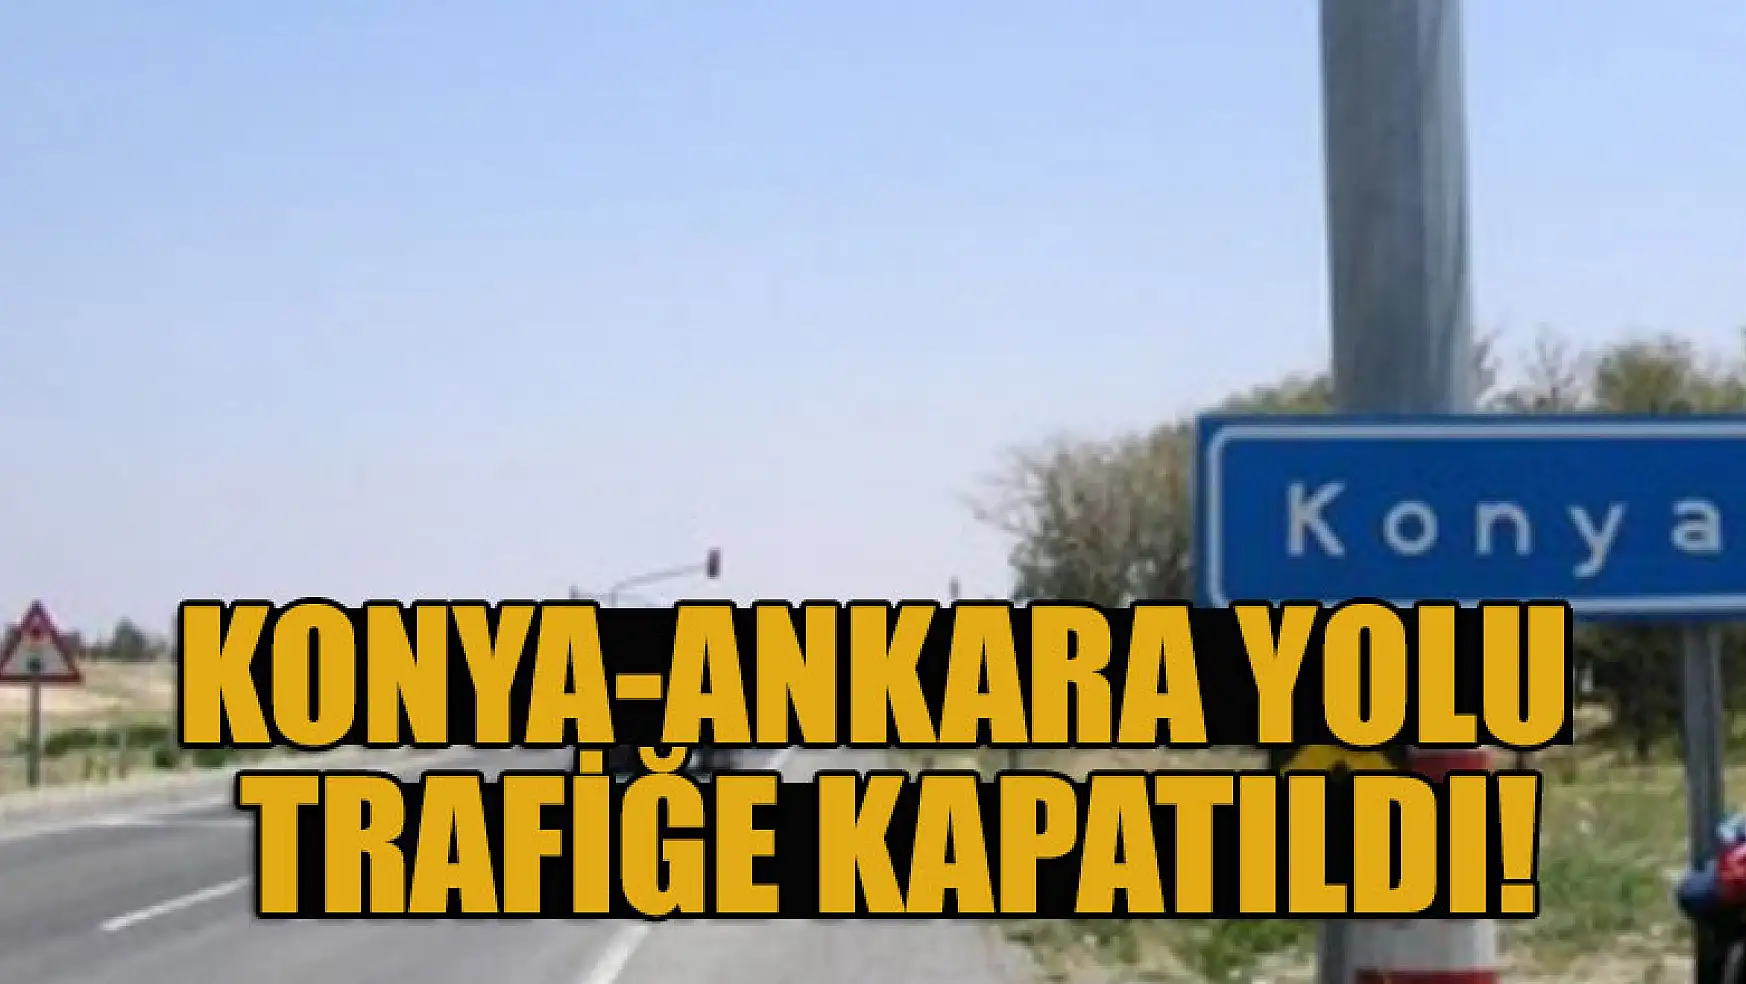 Konya-Ankara yolu trafiğe kapatıldı